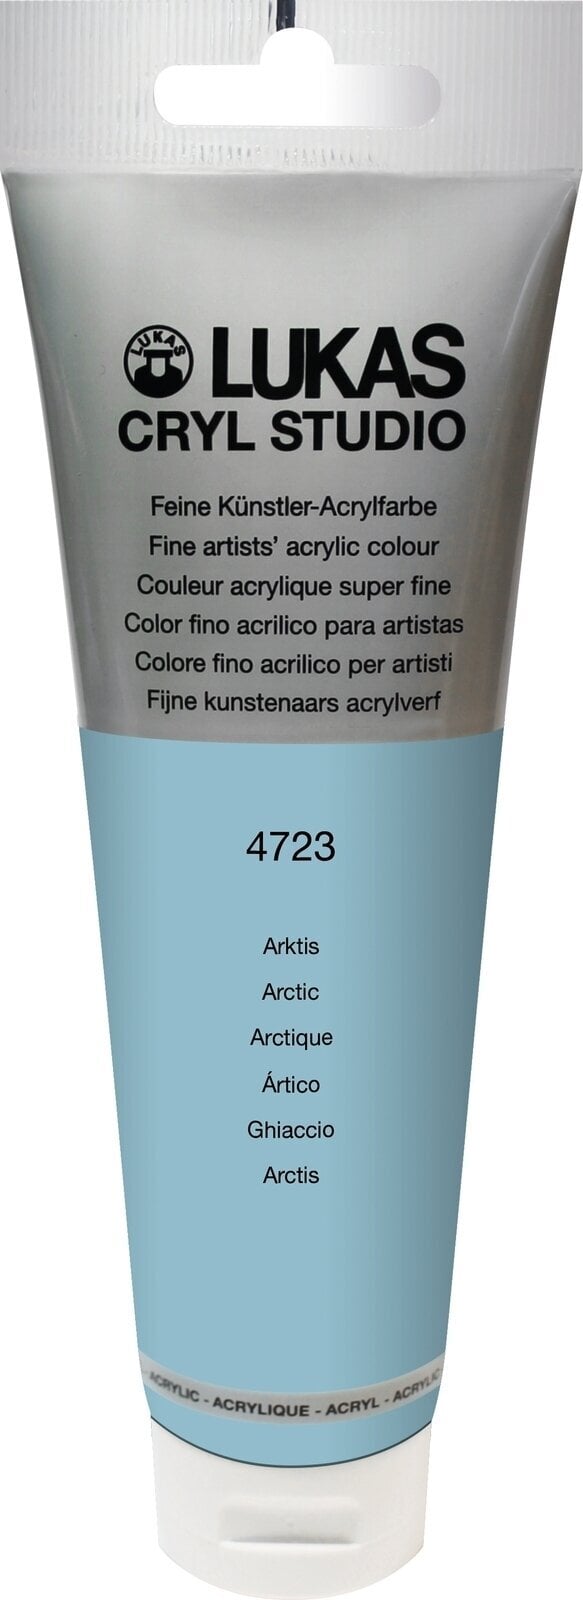 Akrylová farba Lukas Cryl Studio Acrylic Paint Plastic Tube Akrylová farba Arctic 125 ml 1 ks